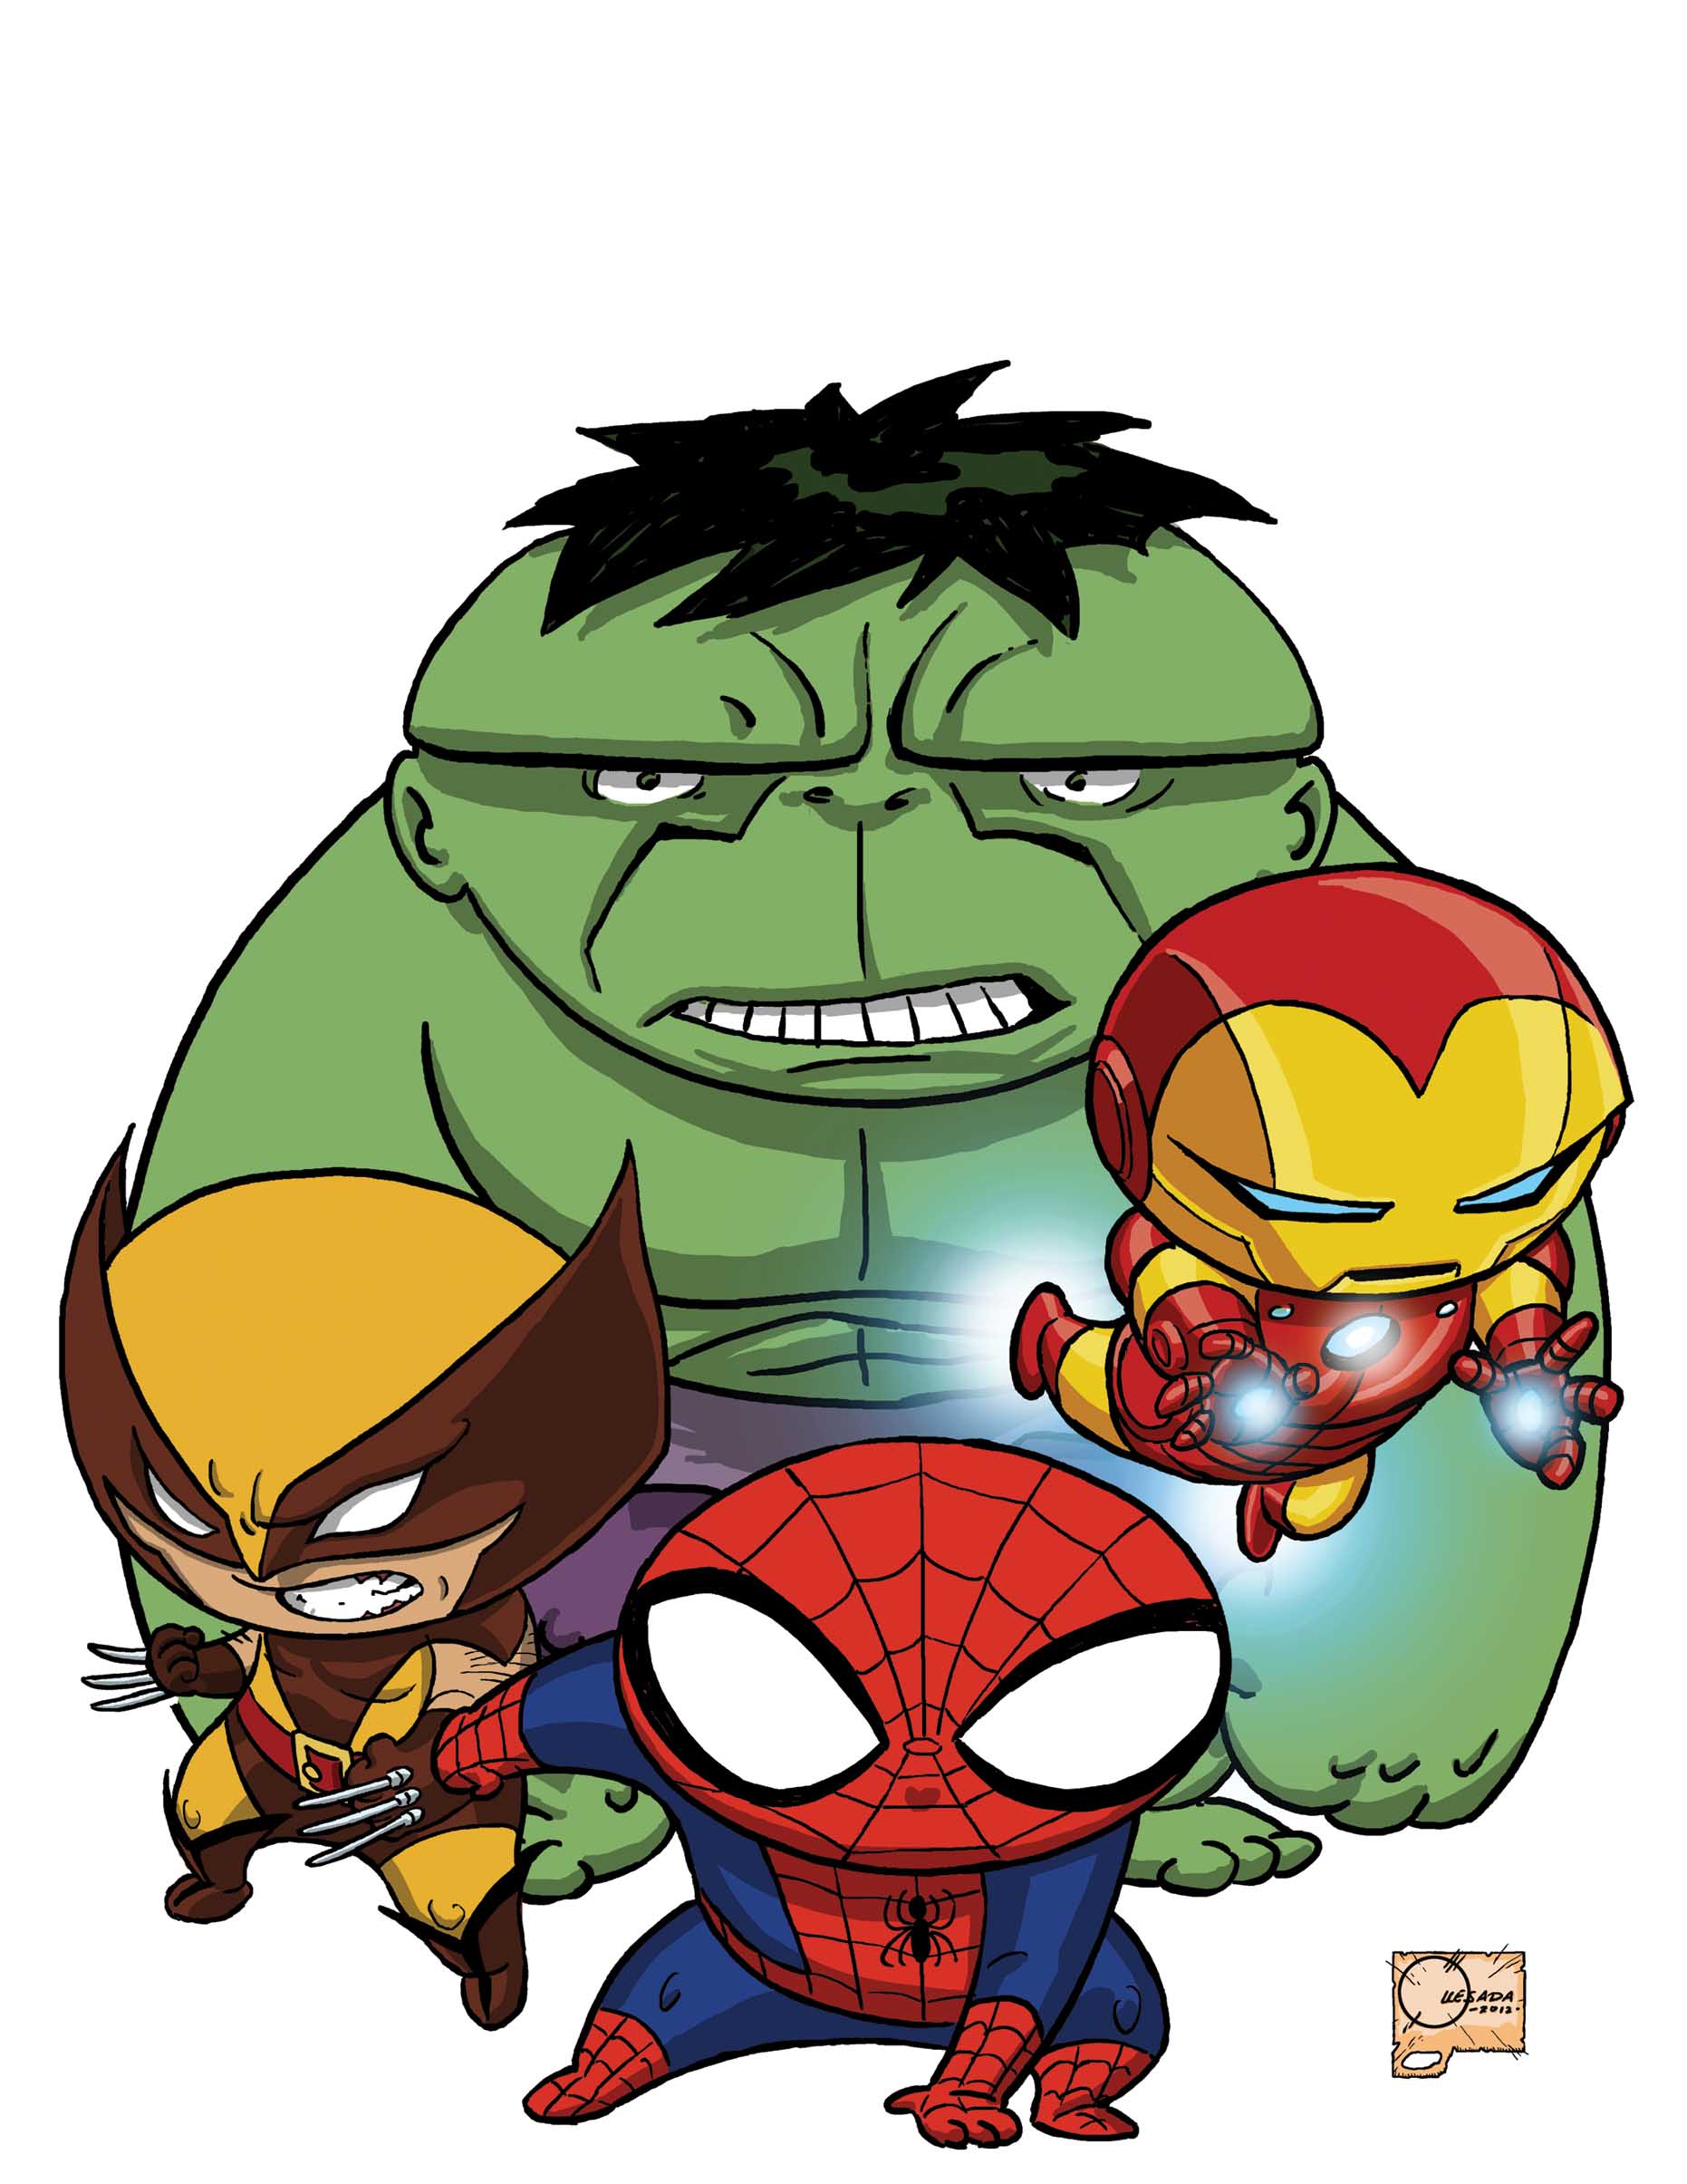 Avengers Assemble (2012) #9 (Quesada Variant)